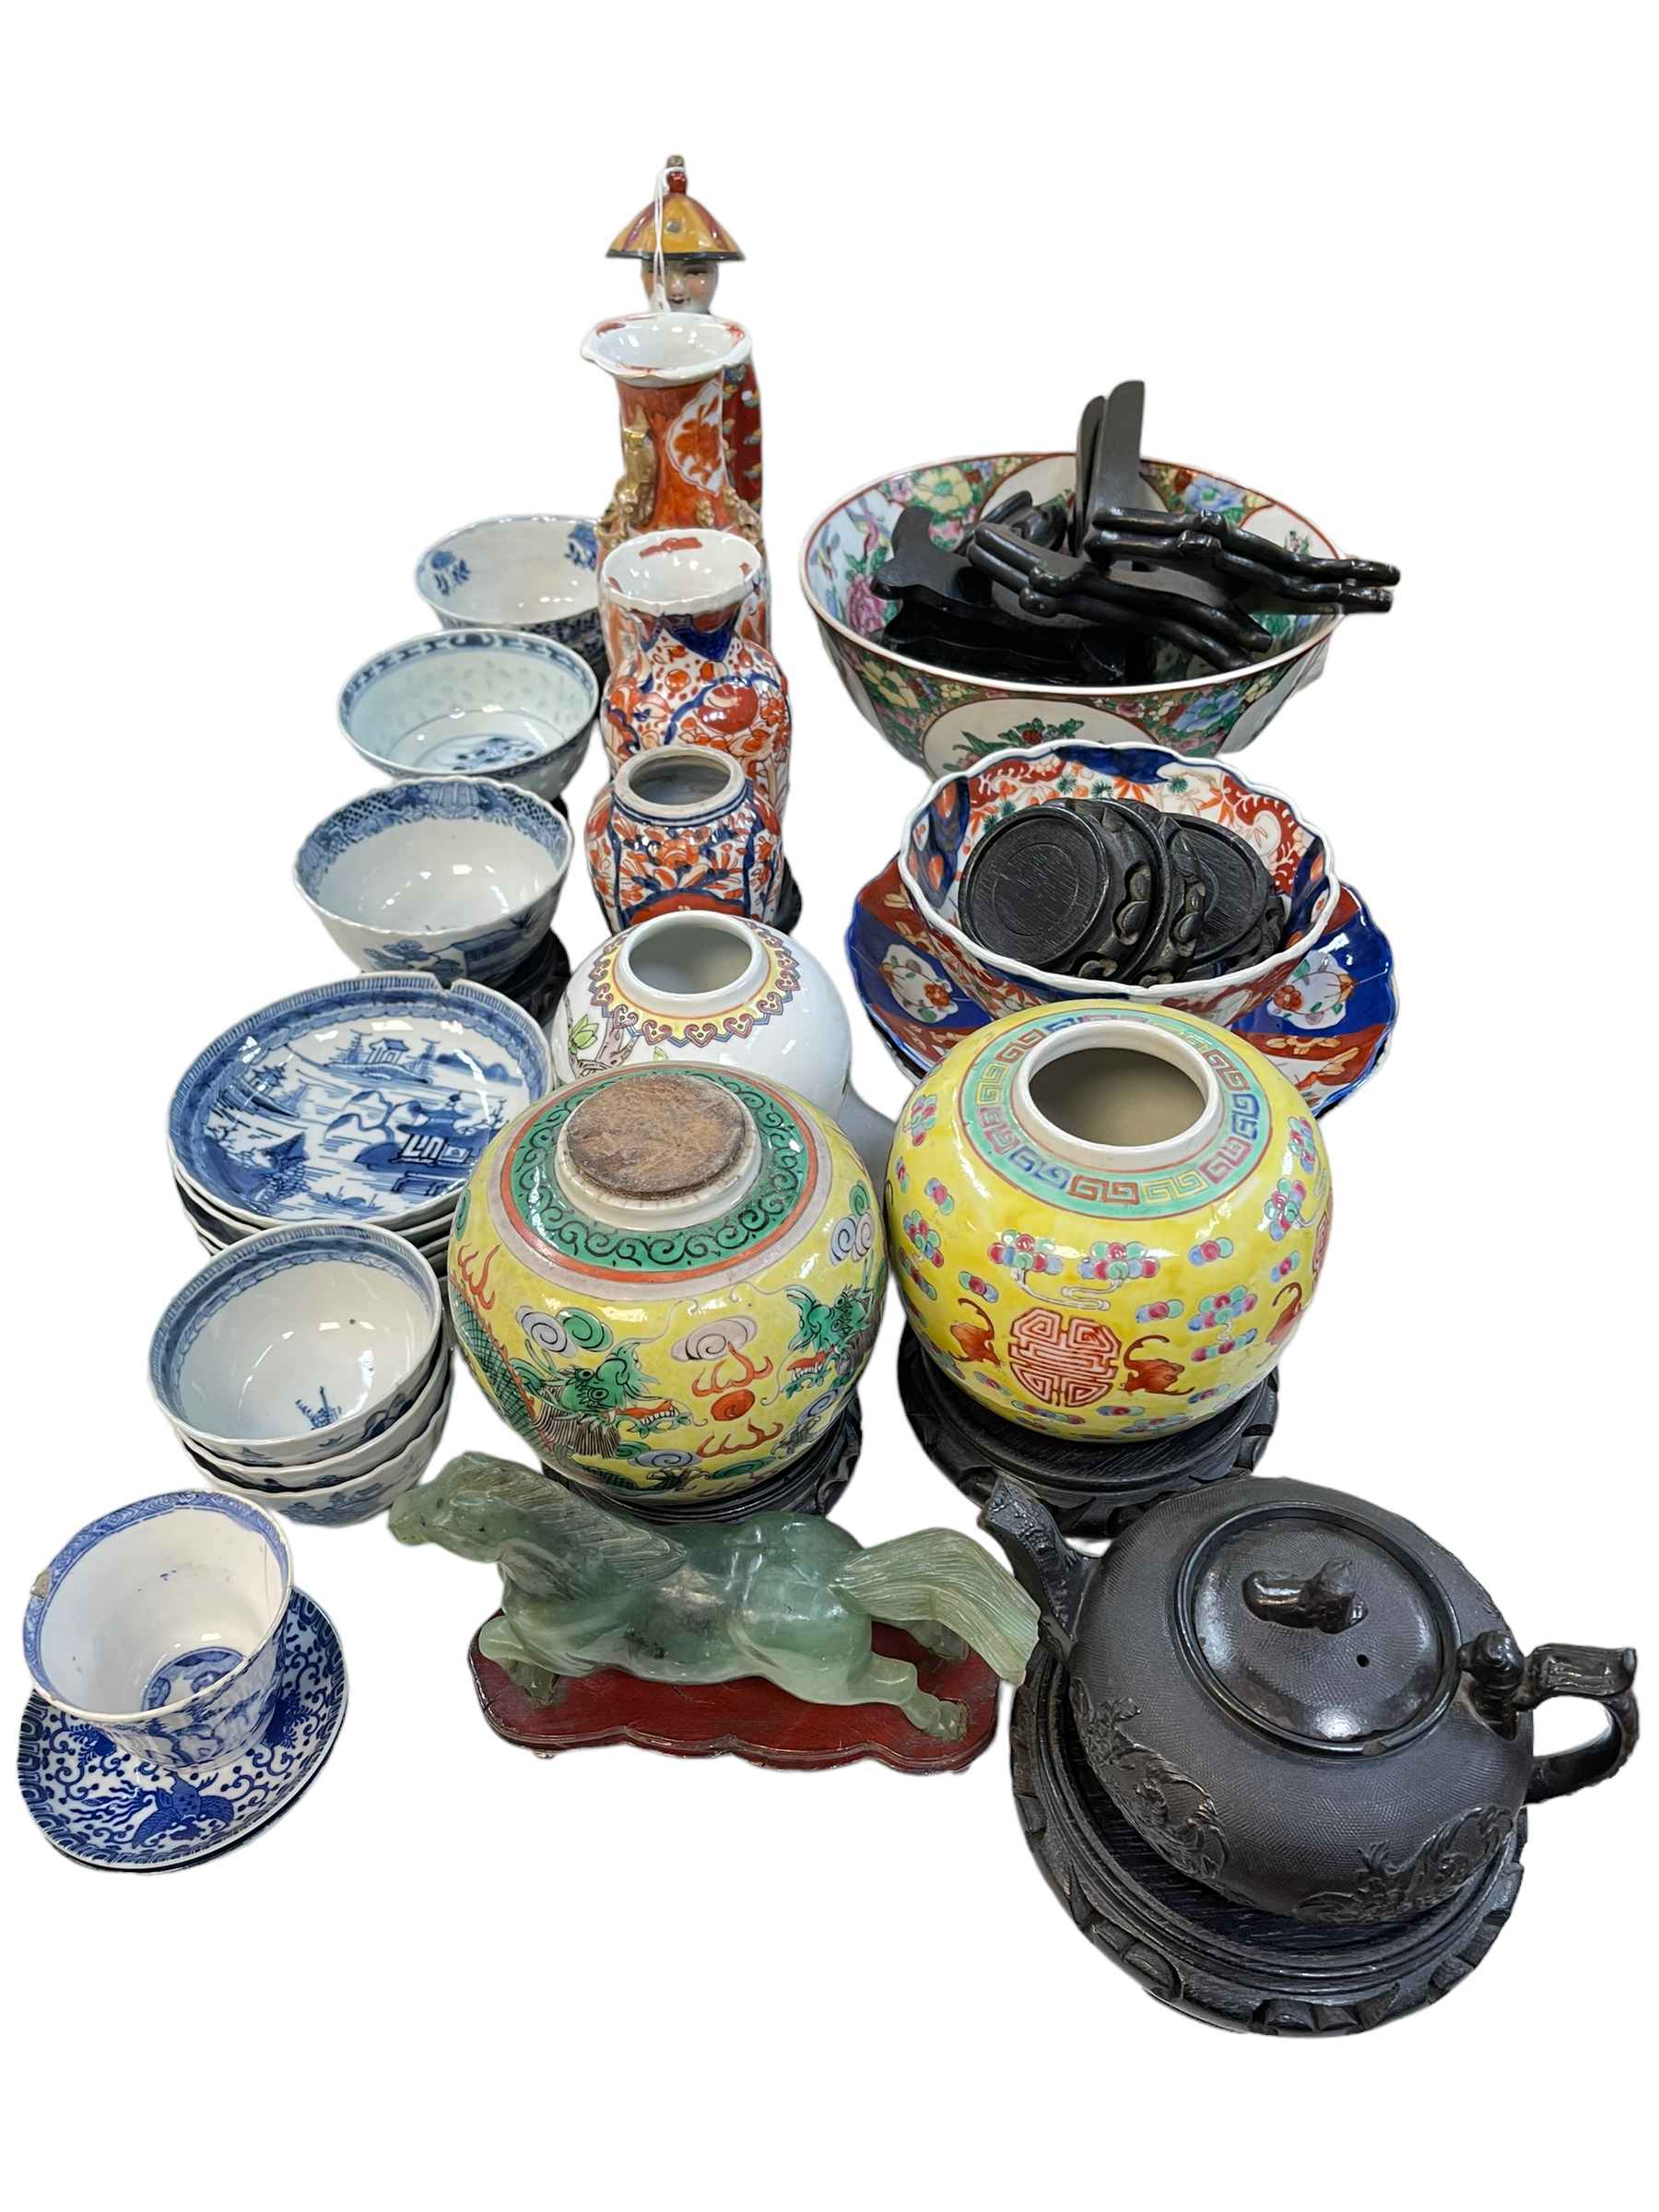 Collection of Oriental wares including tea bowls, ginger jars, vases, etc.